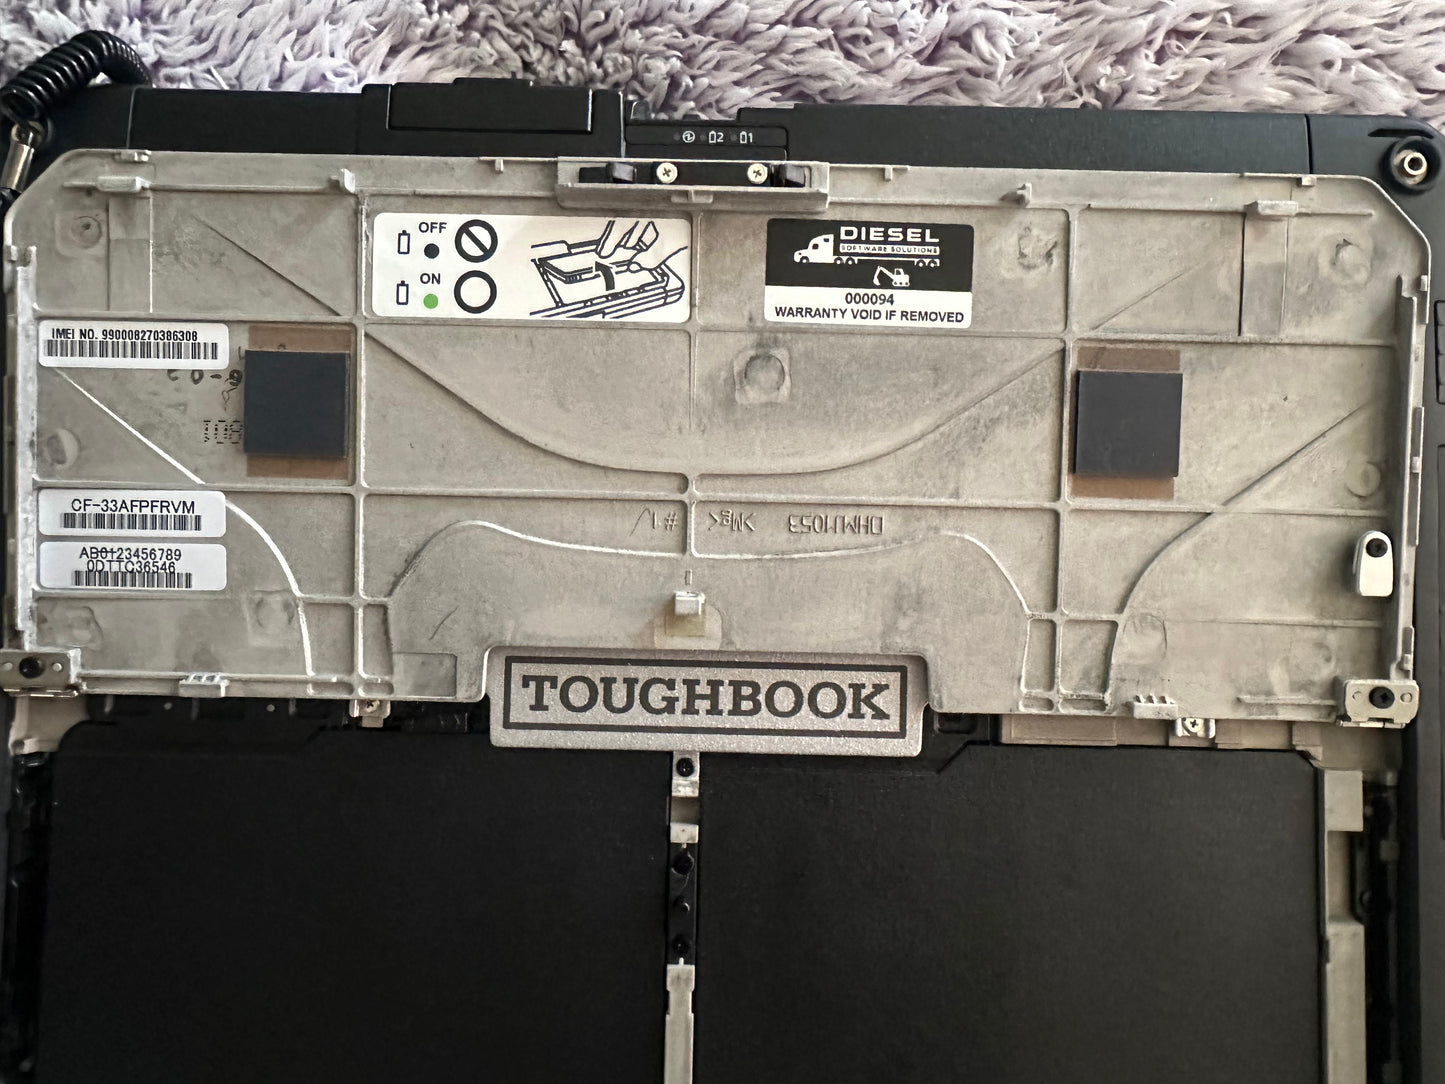 Refurbished Panasonic Toughbook CF-33